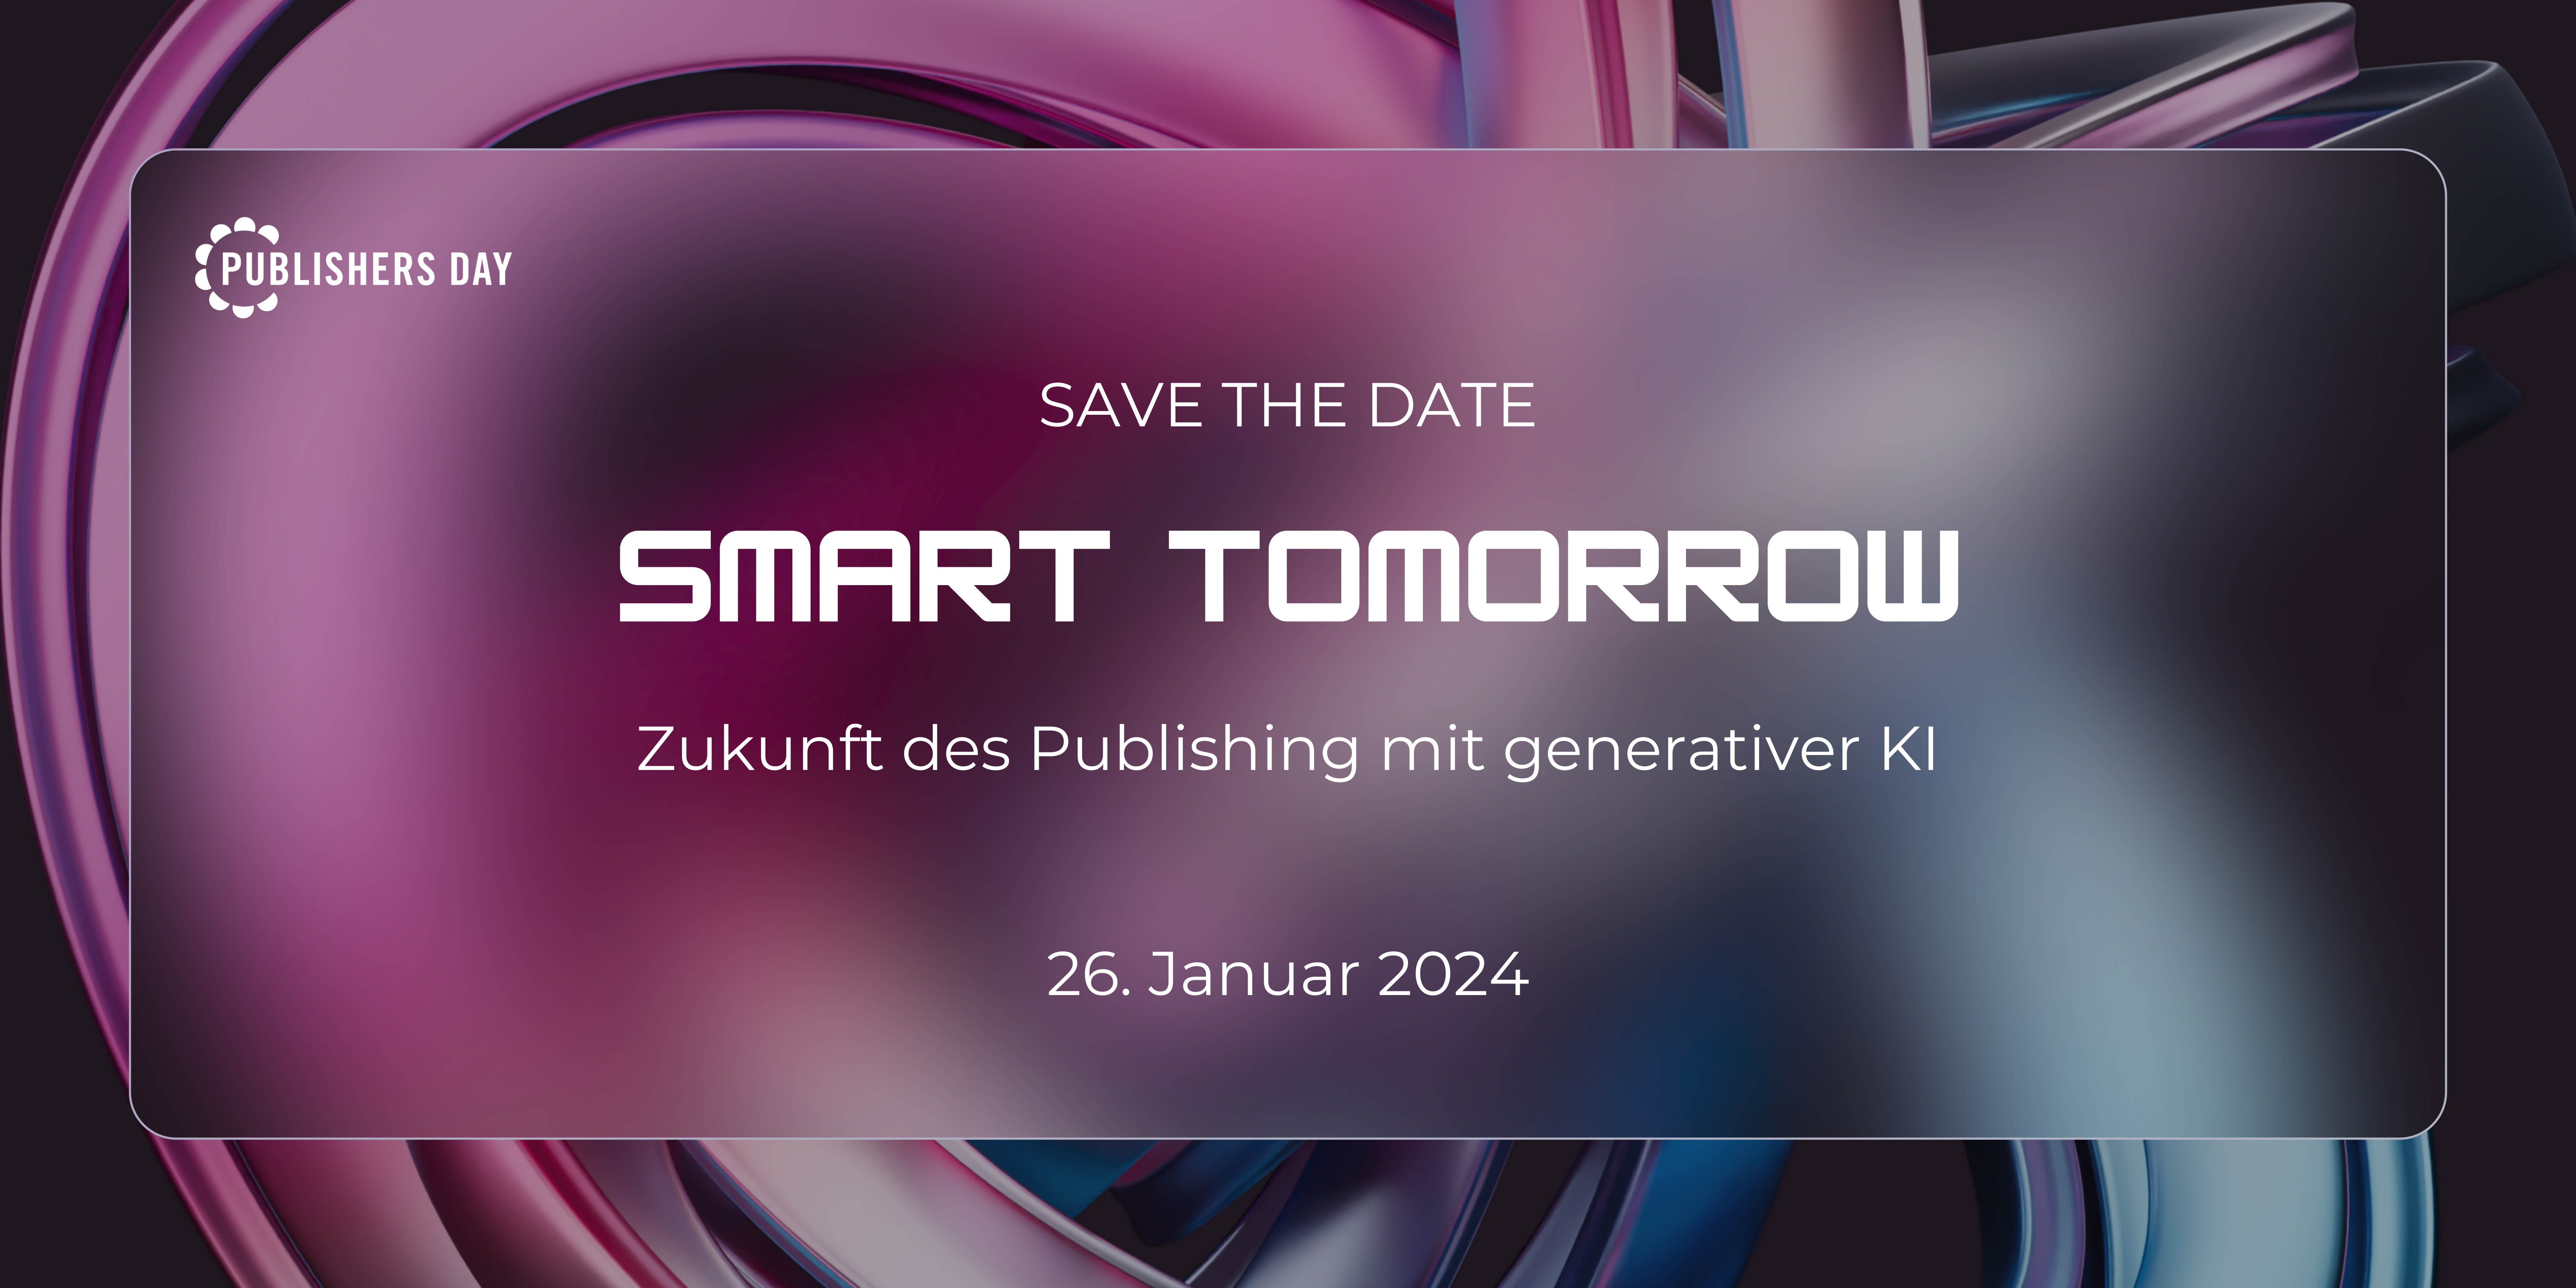 Publishers Day 2024 - Smart Tomorrow